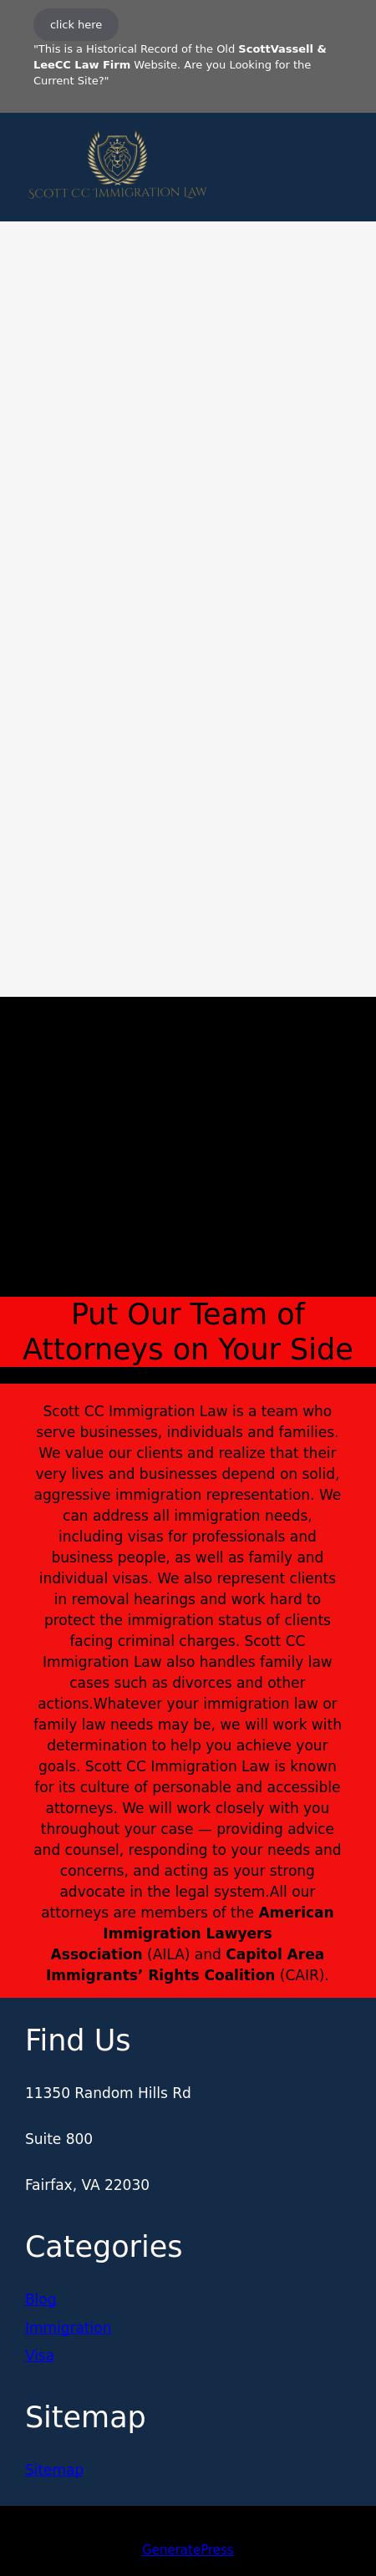 ScottDel-CC Law Group - Rockville MD Lawyers